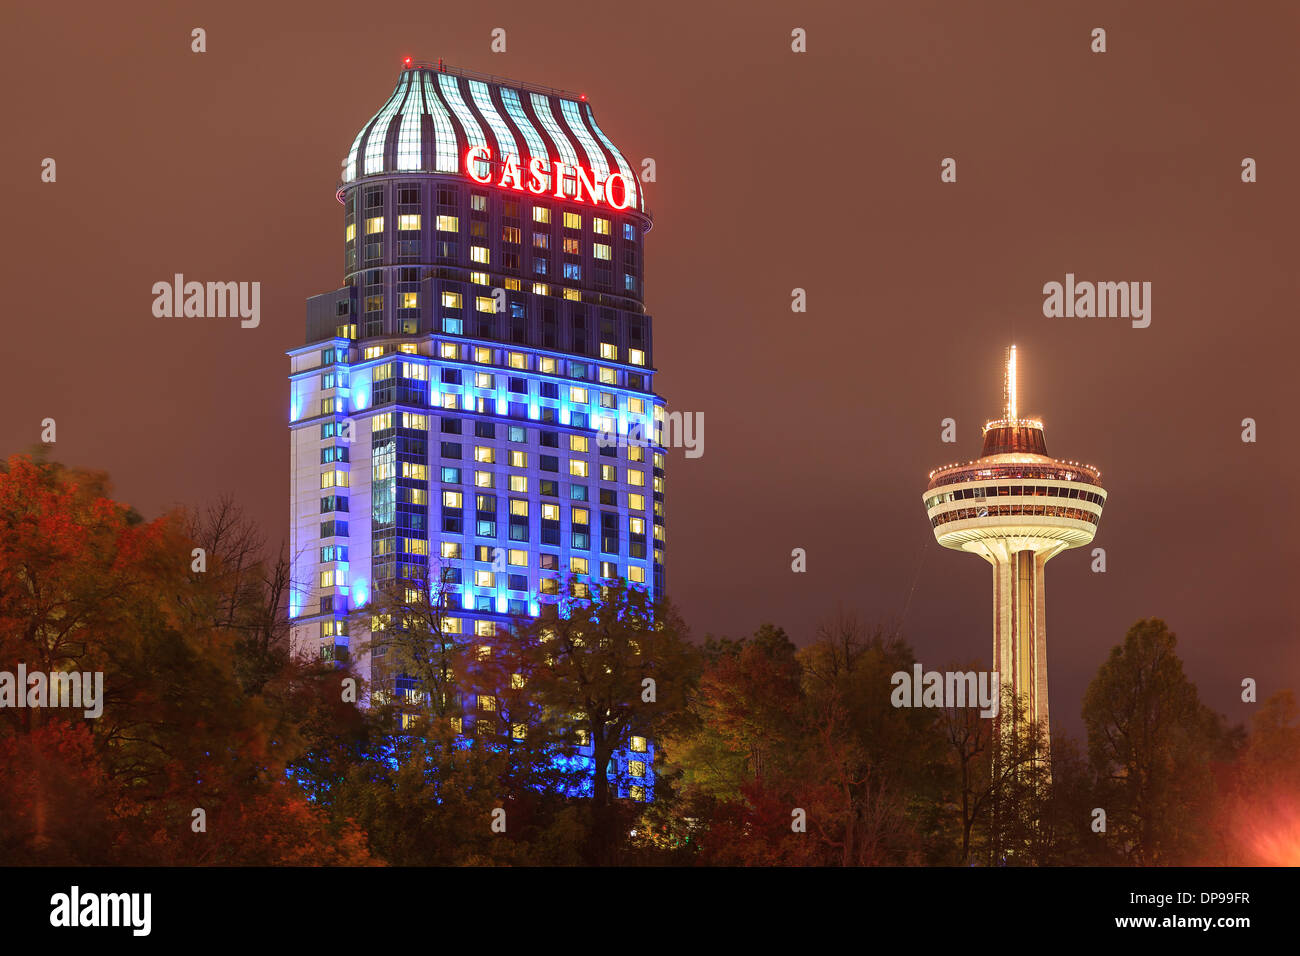 Casino et la tour Skylon, Niagara Falls, Ontario, Canada Banque D'Images